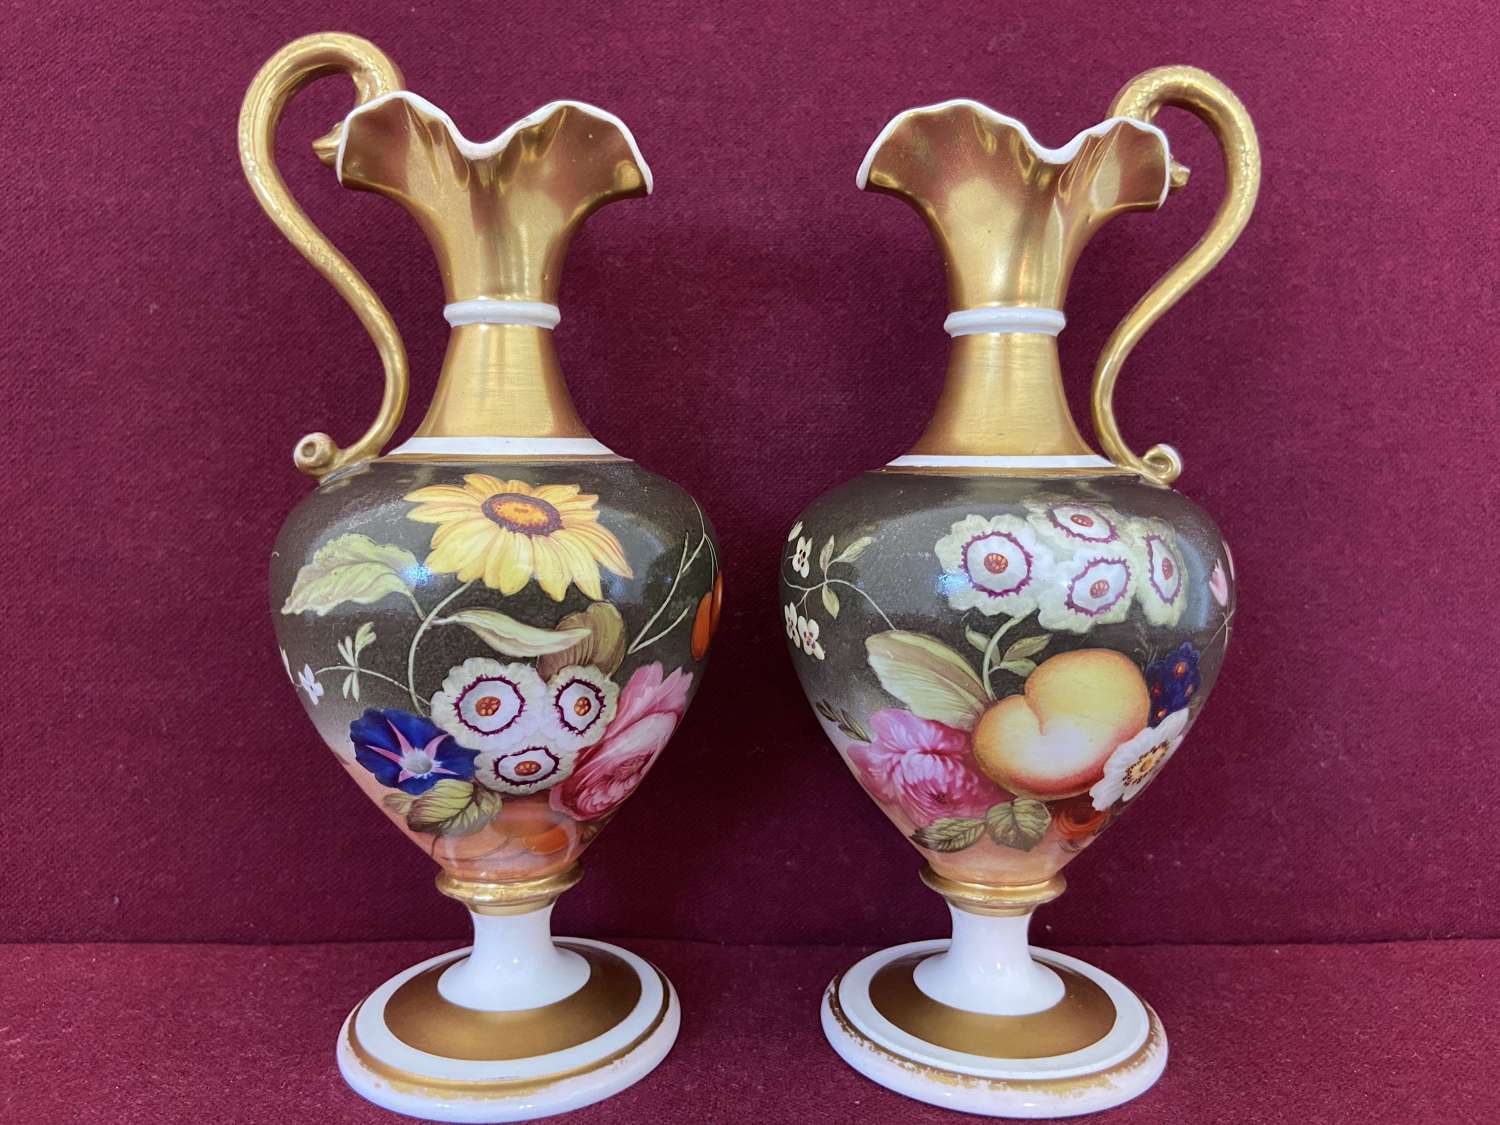 A pair of Coalport Porcelain Ewers c.1825